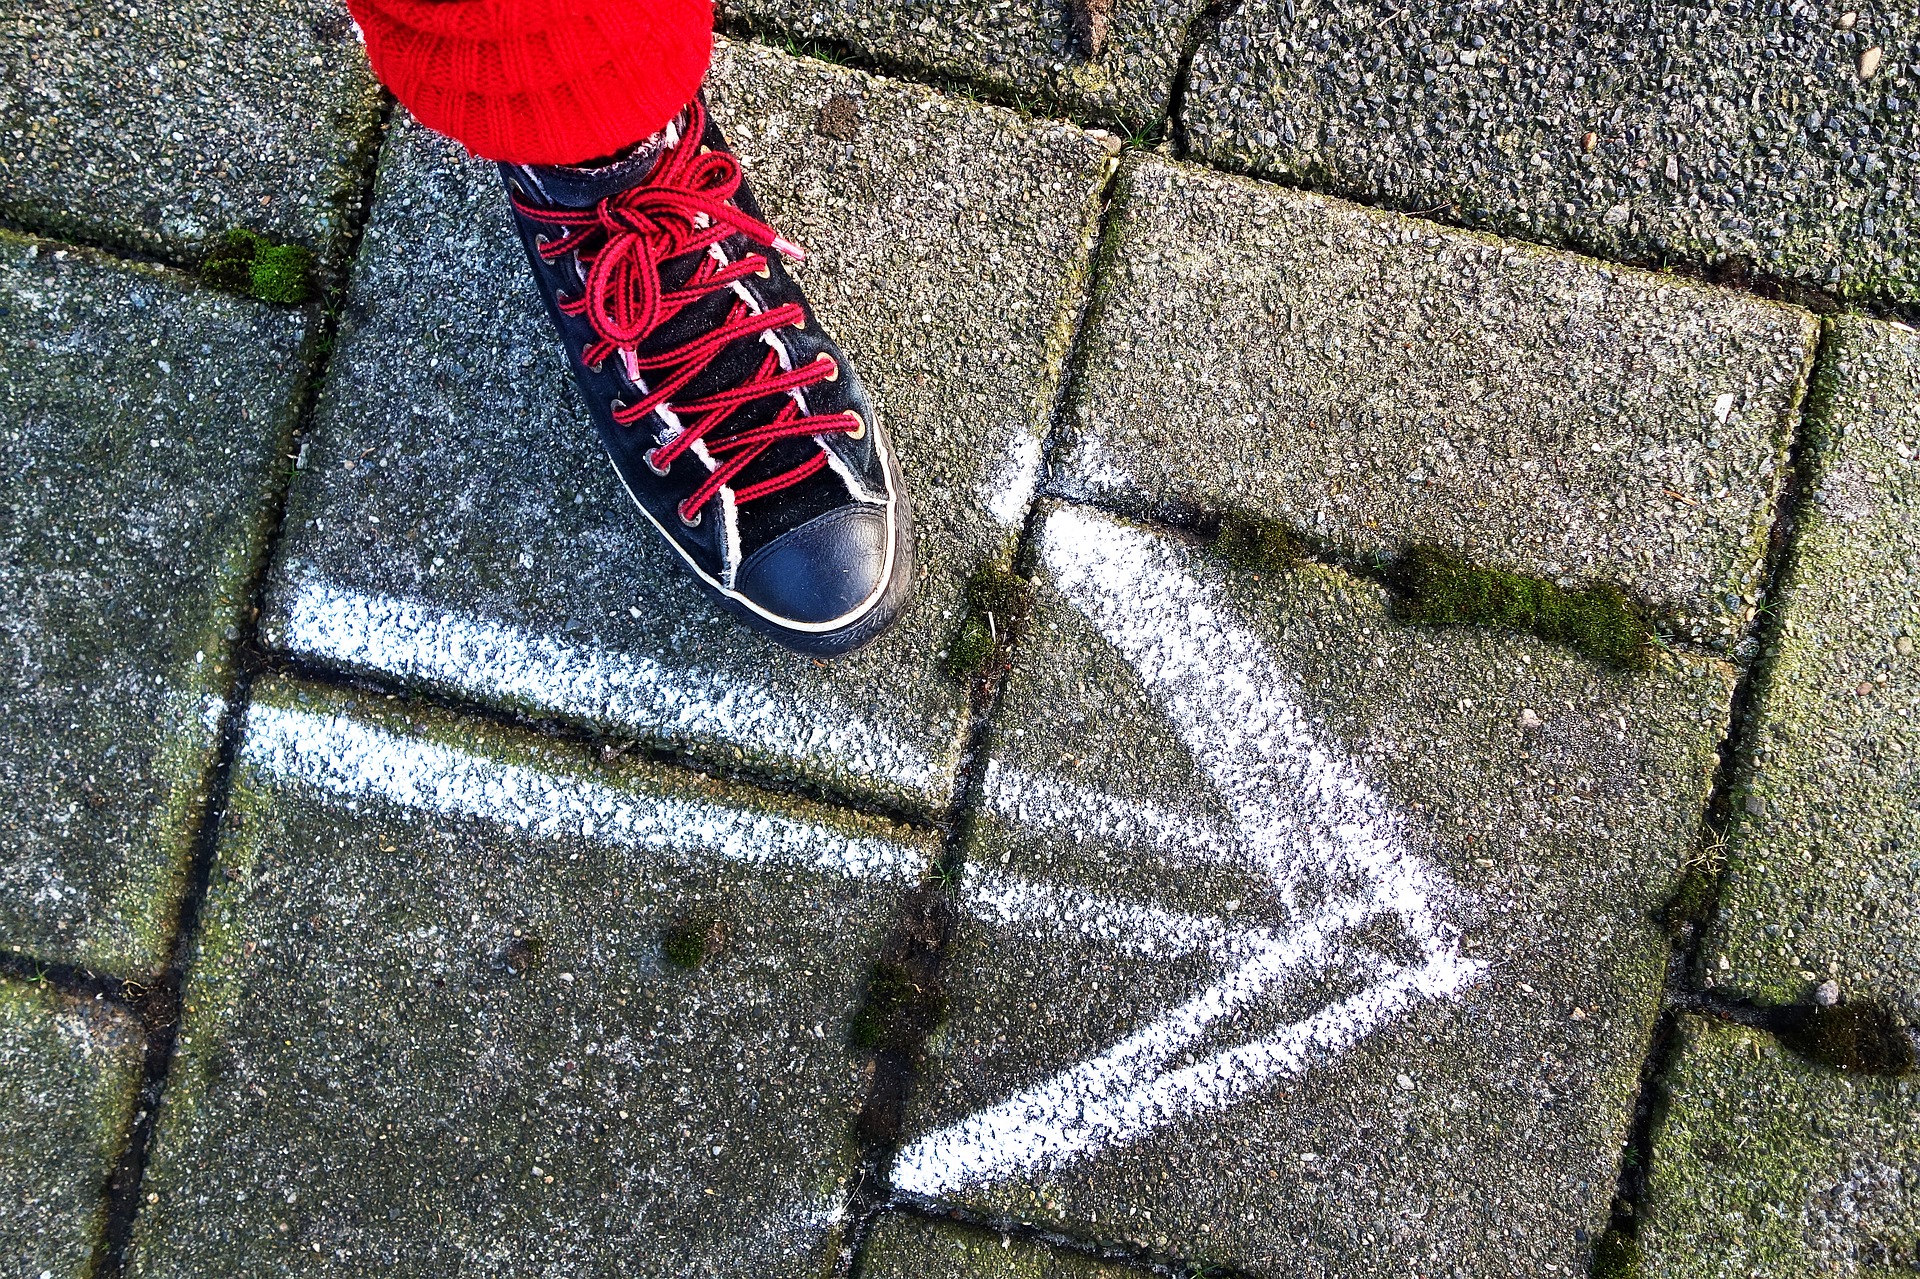 shoe next to chalk arrow on ground